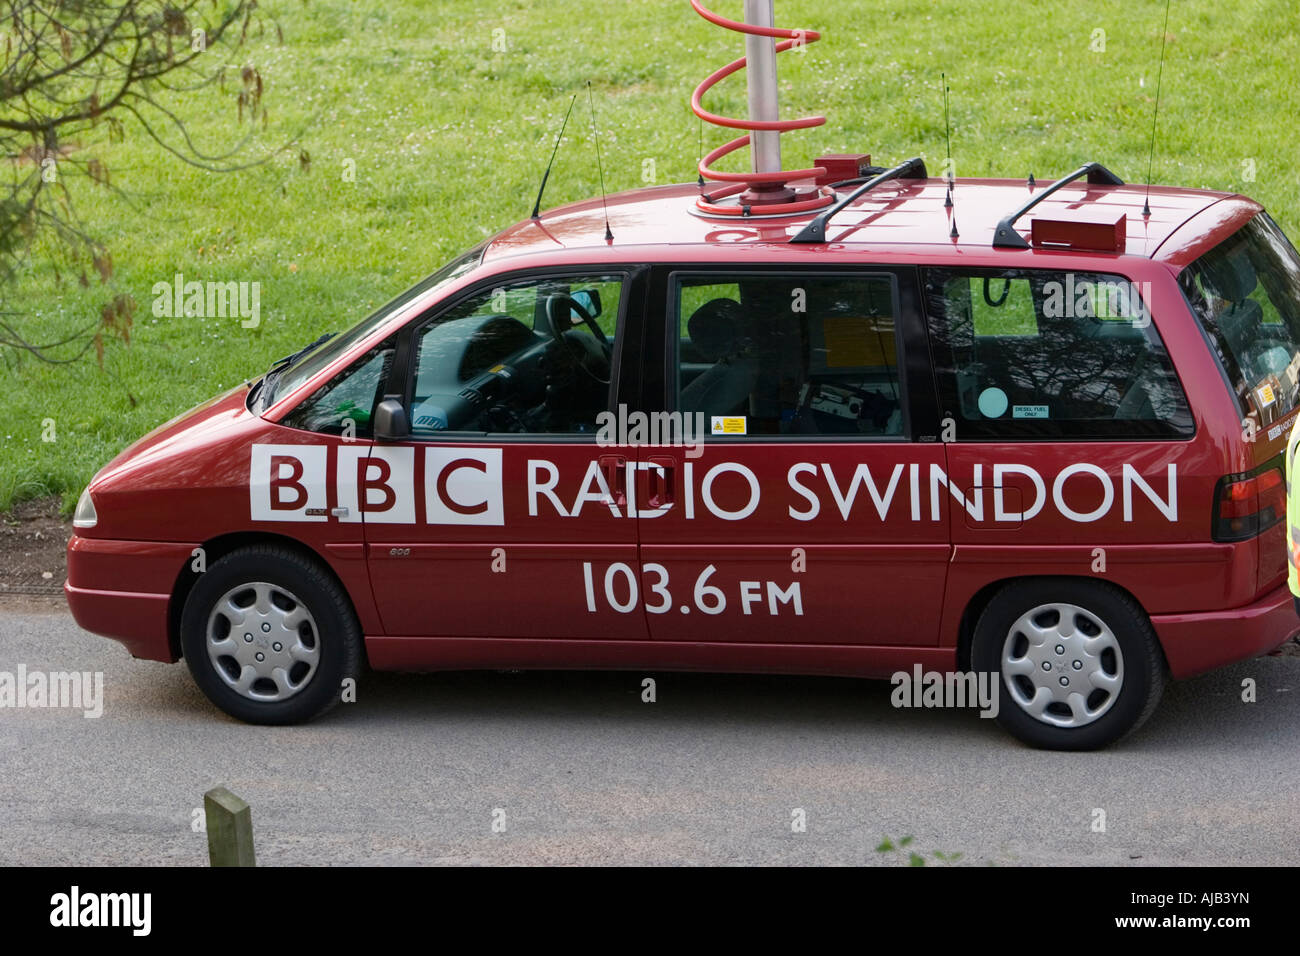 BBC Radio Swindon outside broadcast vehicle Stock Photo - Alamy